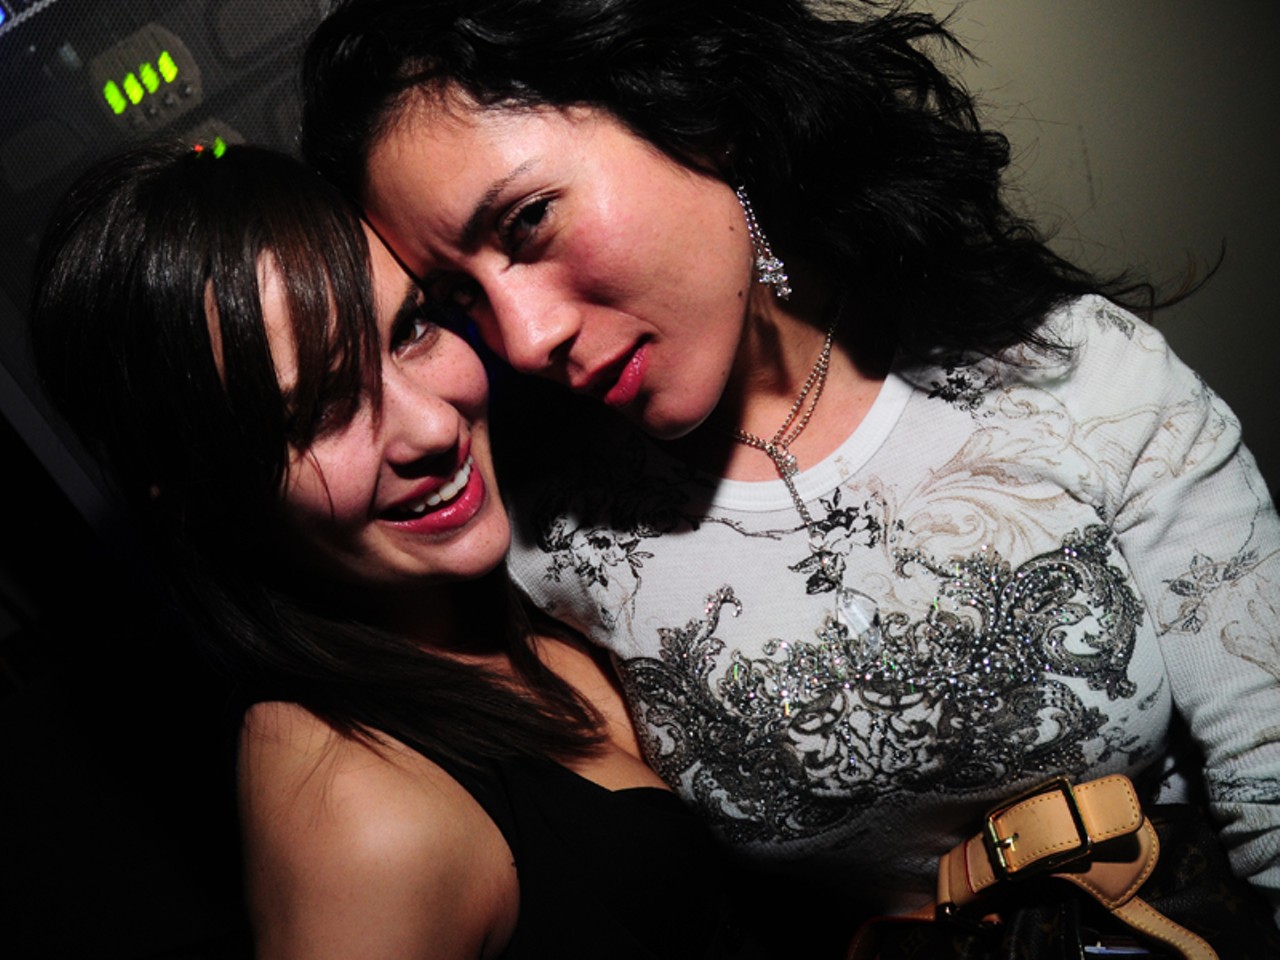 Club-goers Lara and Denia last night at Sol.